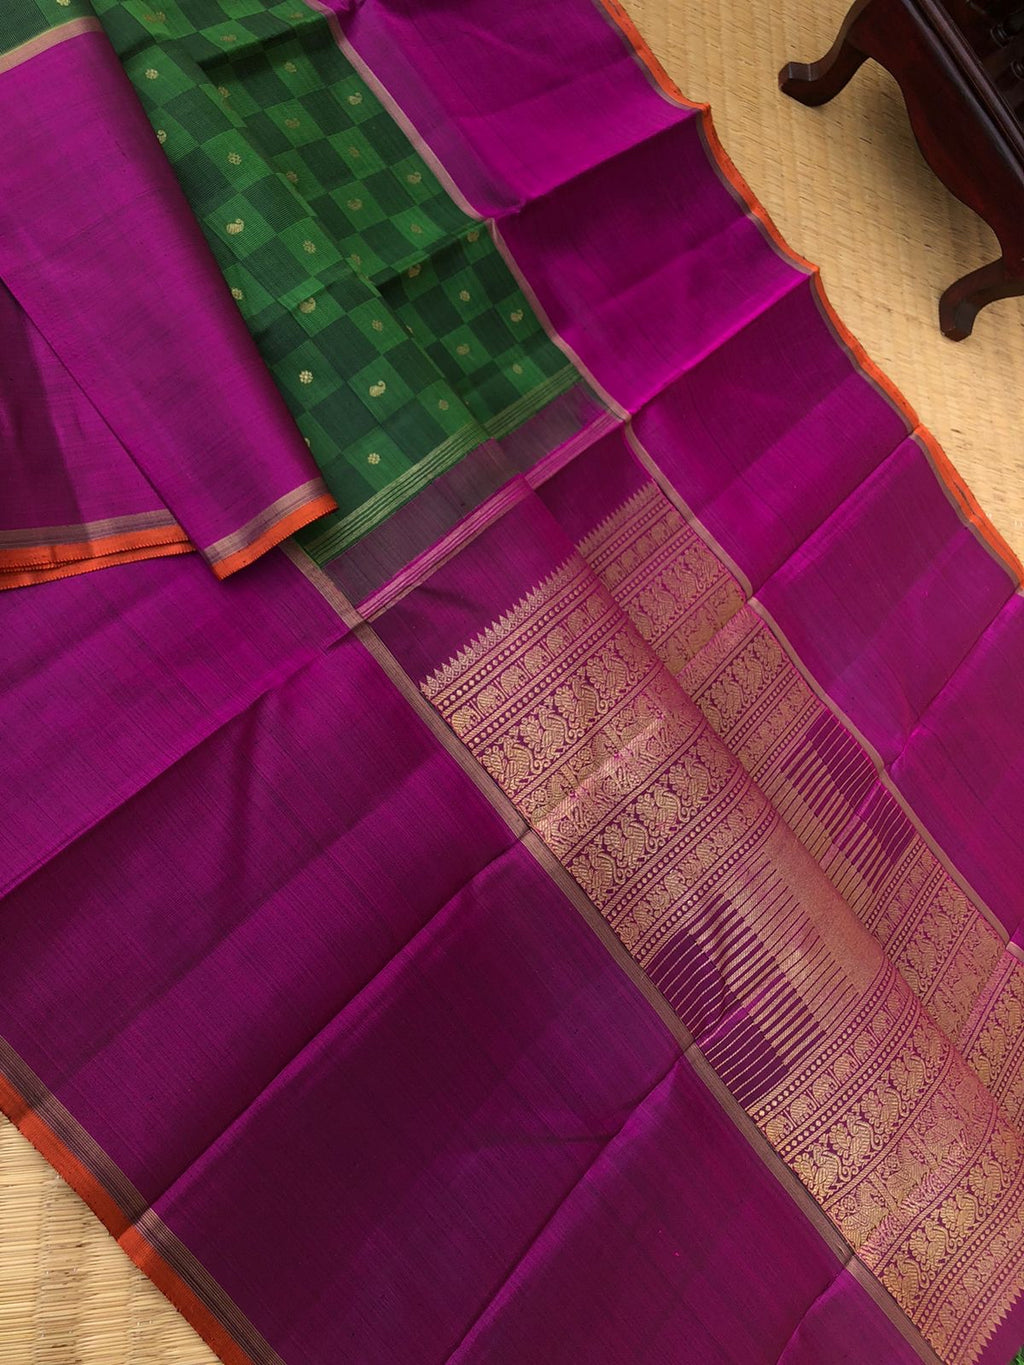 Kamakshi - Festive Kanchivaram - the Meenakshi green and majenta mat design Kanchivaram for people who love broad borders with beautiful woven pallu